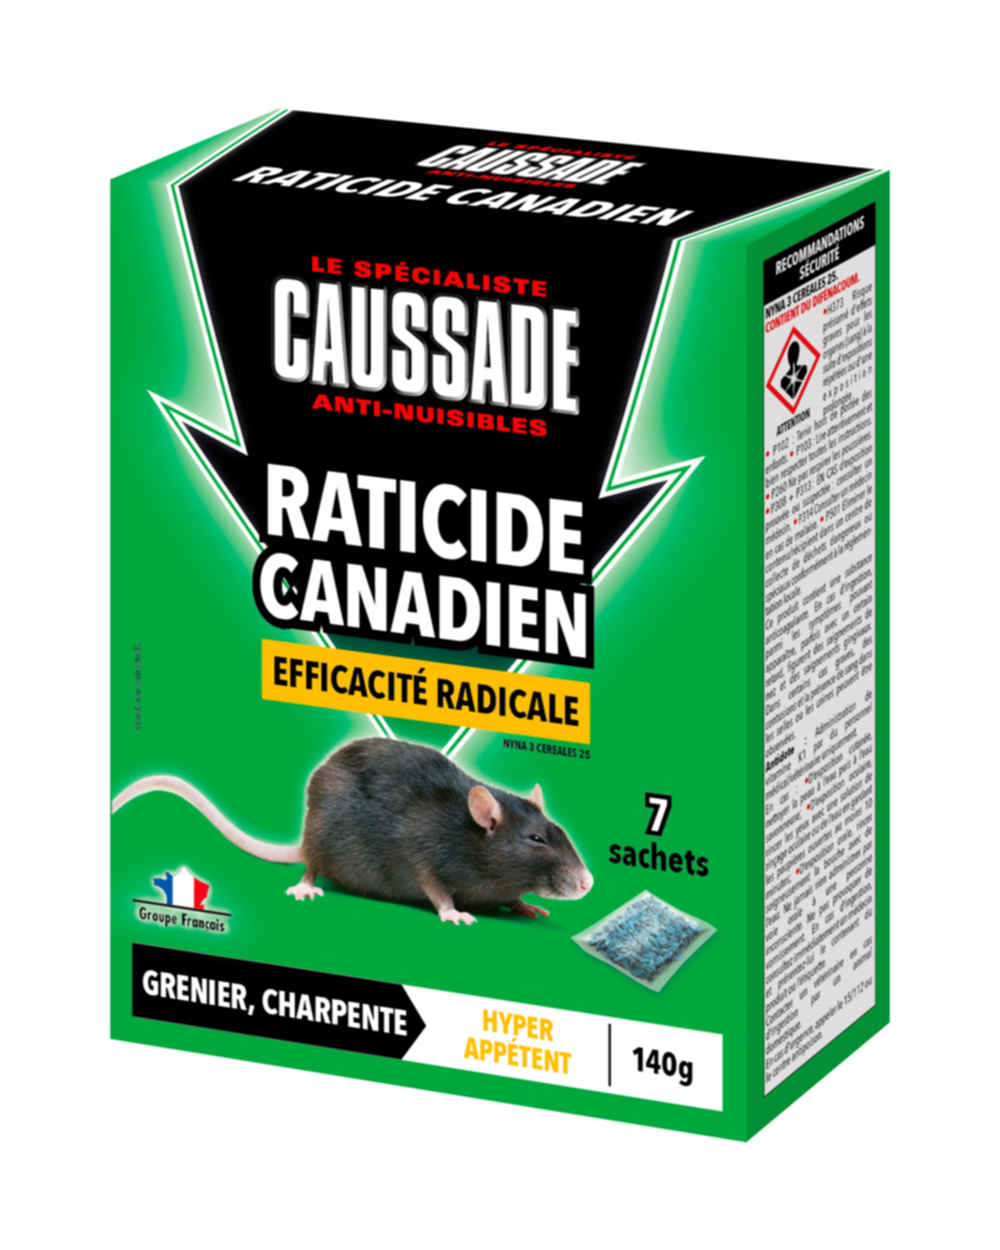 7 Sachets raticide canadien 140g - CAUSSADE